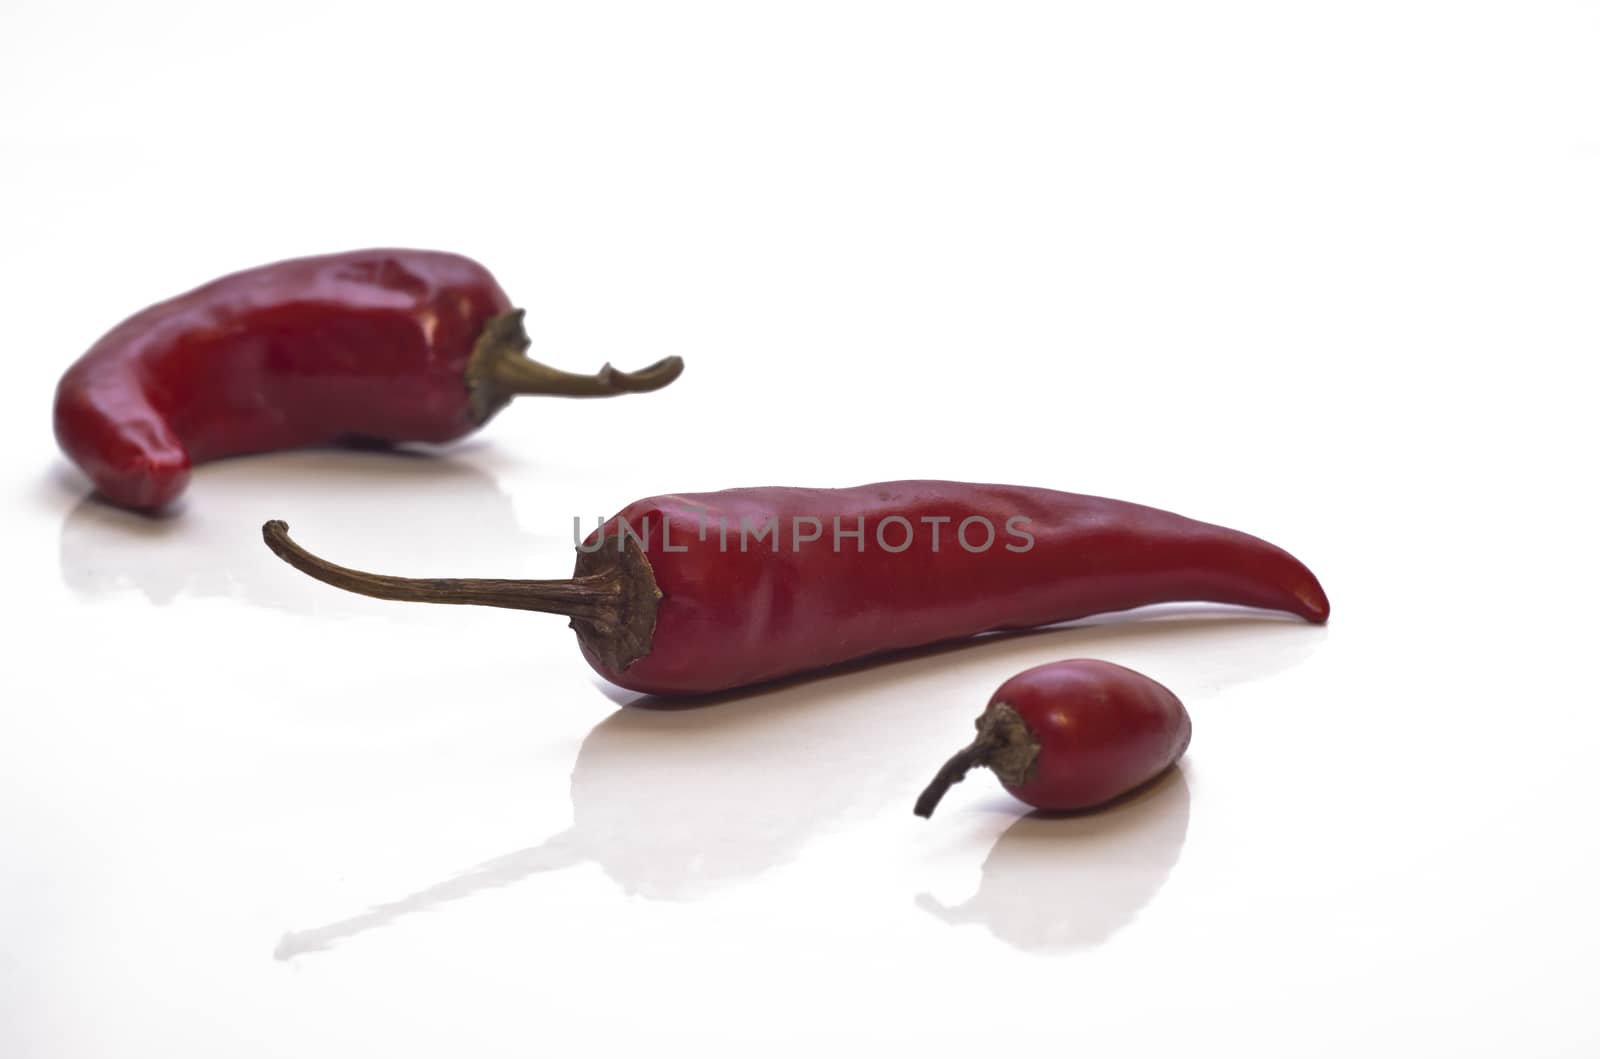 Red hot chili peppers by gandolfocannatella